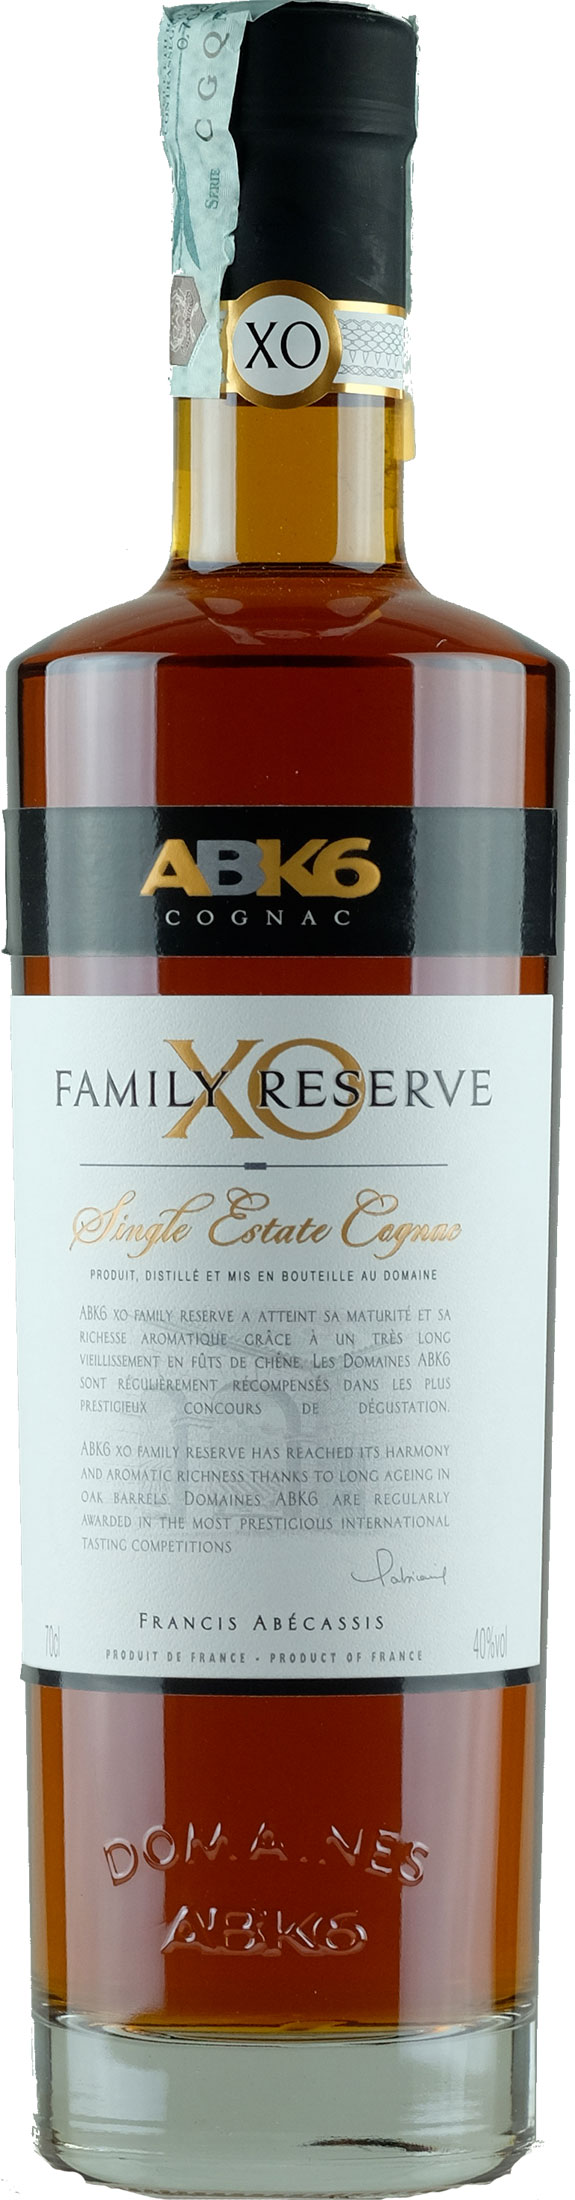 Abk6 Cognac Family Reserve XO